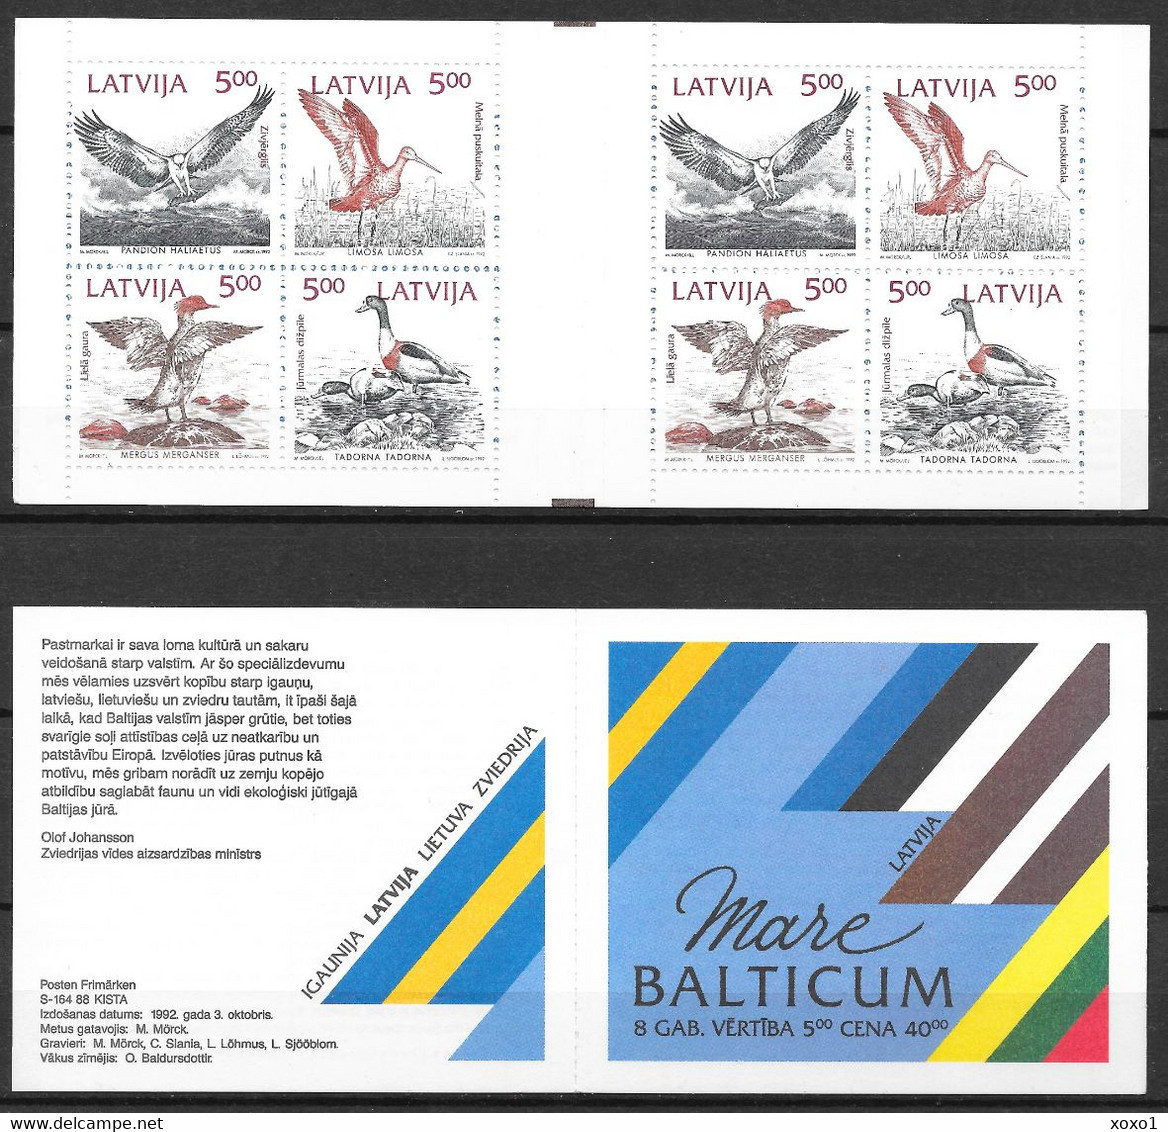 LATVIA 1992 MiNr. 340 - 343 Lettland Joint Issues BIRDS  DUCKS,  EAGLE 8v BOOKLET Mnh ** 6,00 € - Latvia